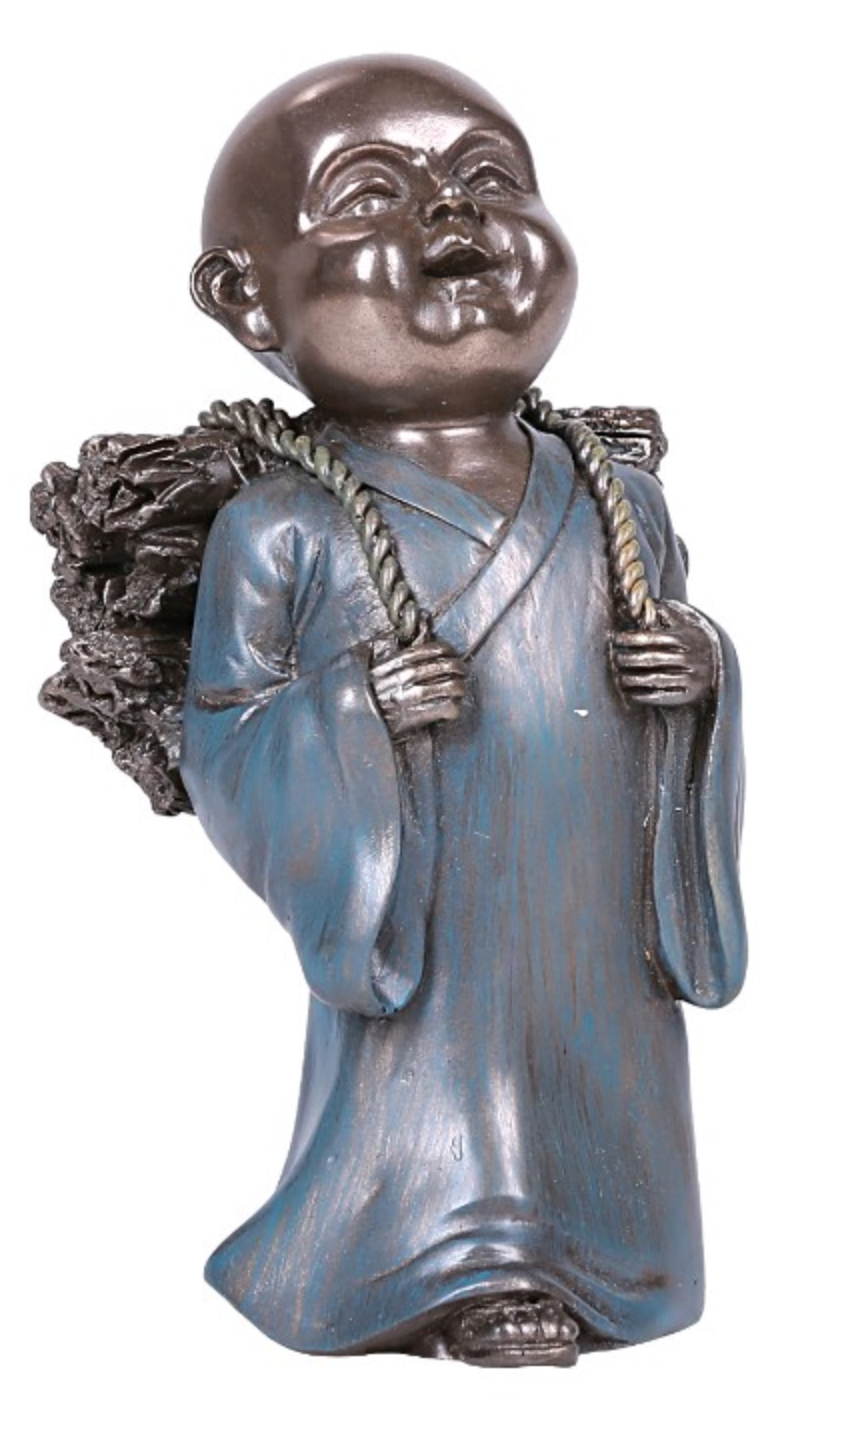 Small Buddhist Monk Figurine